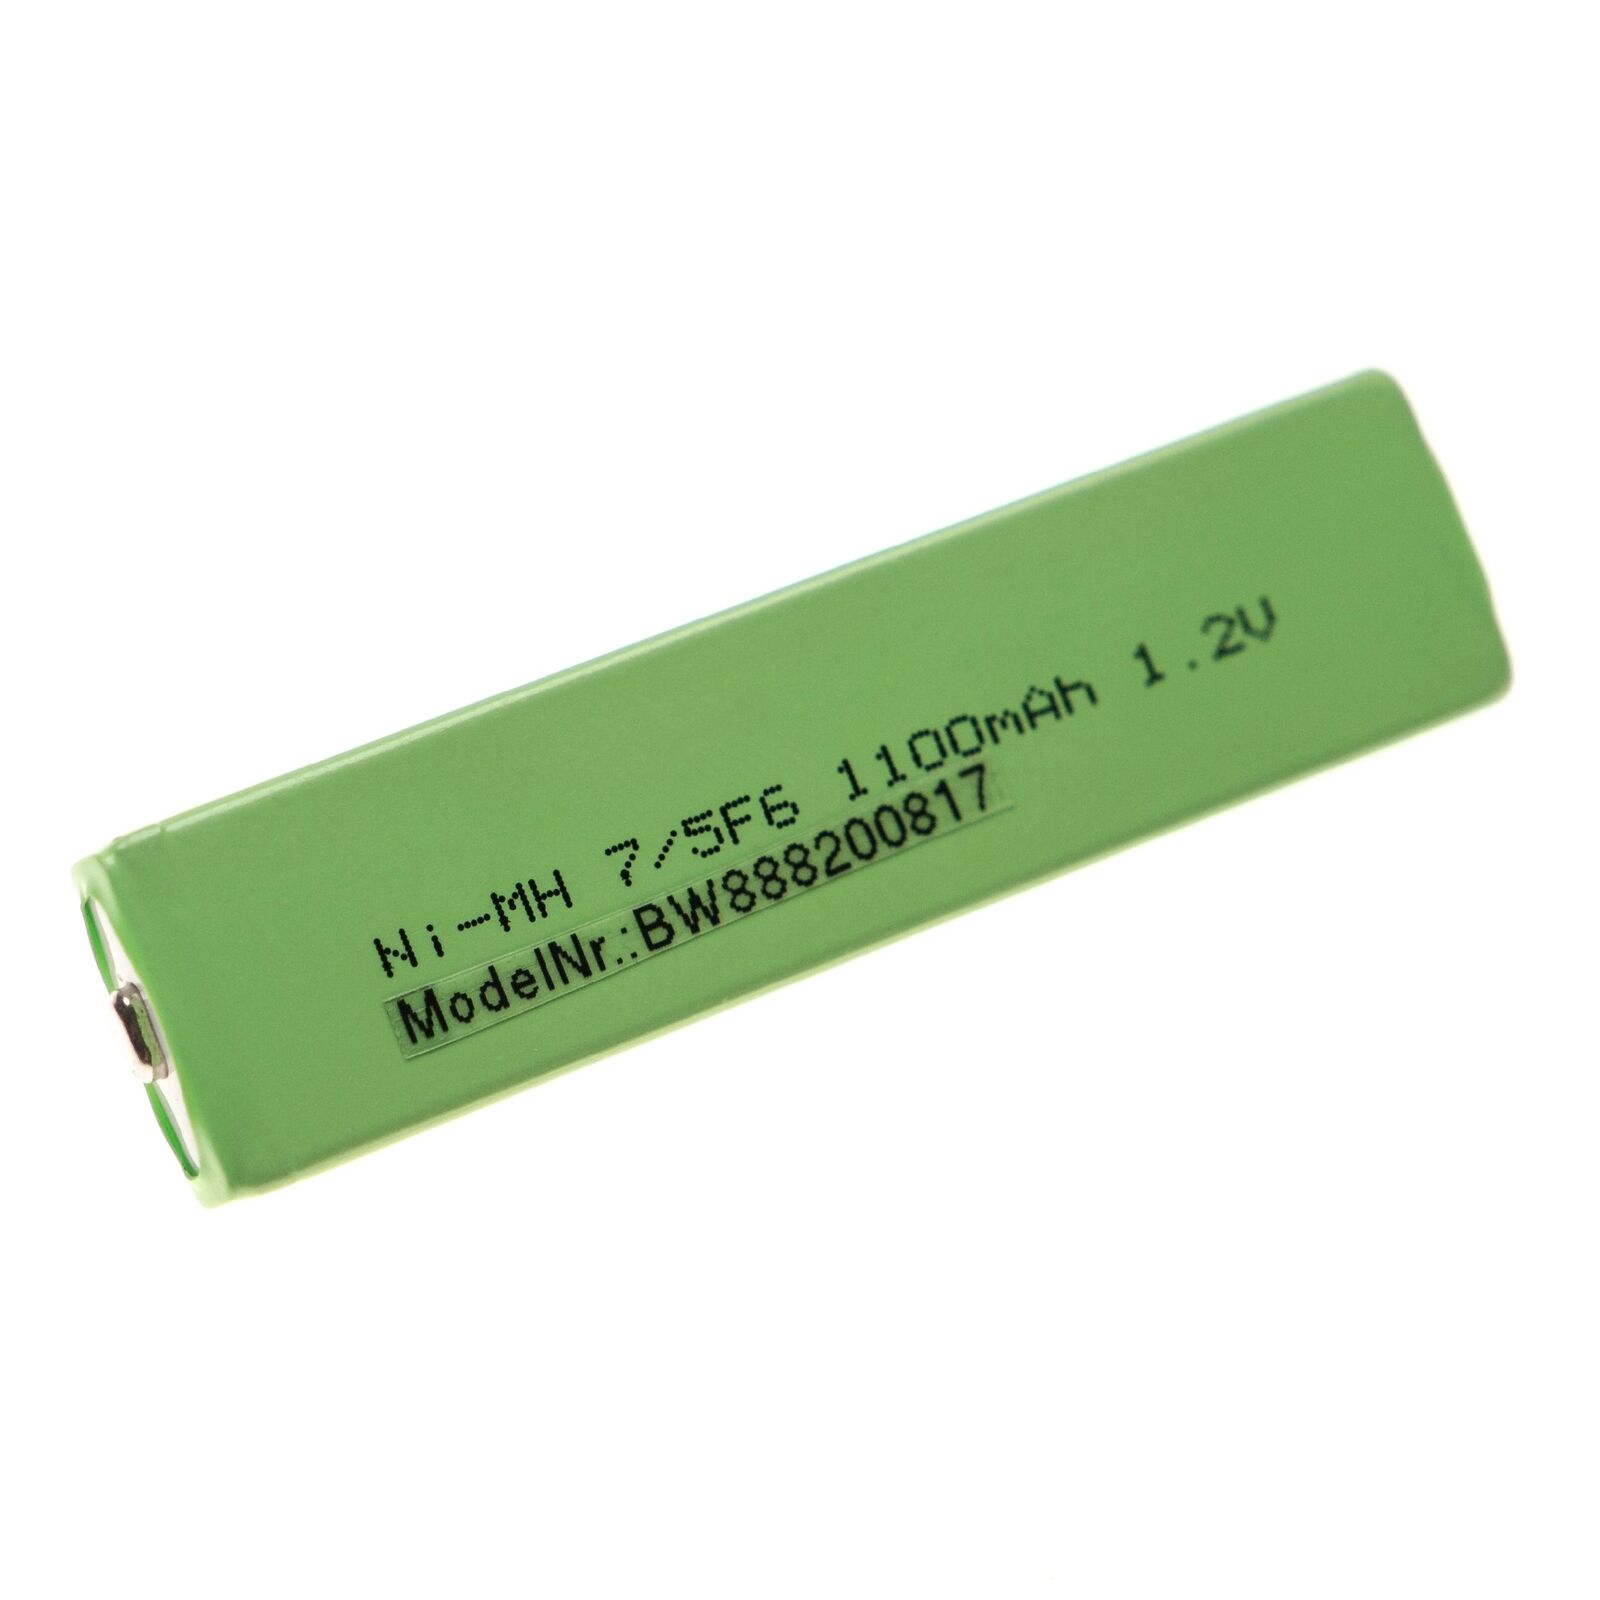 Batterie sony Serie CD Md MP3 Player / NC-5WM, NC-6WM, NH-14WM(compatible)